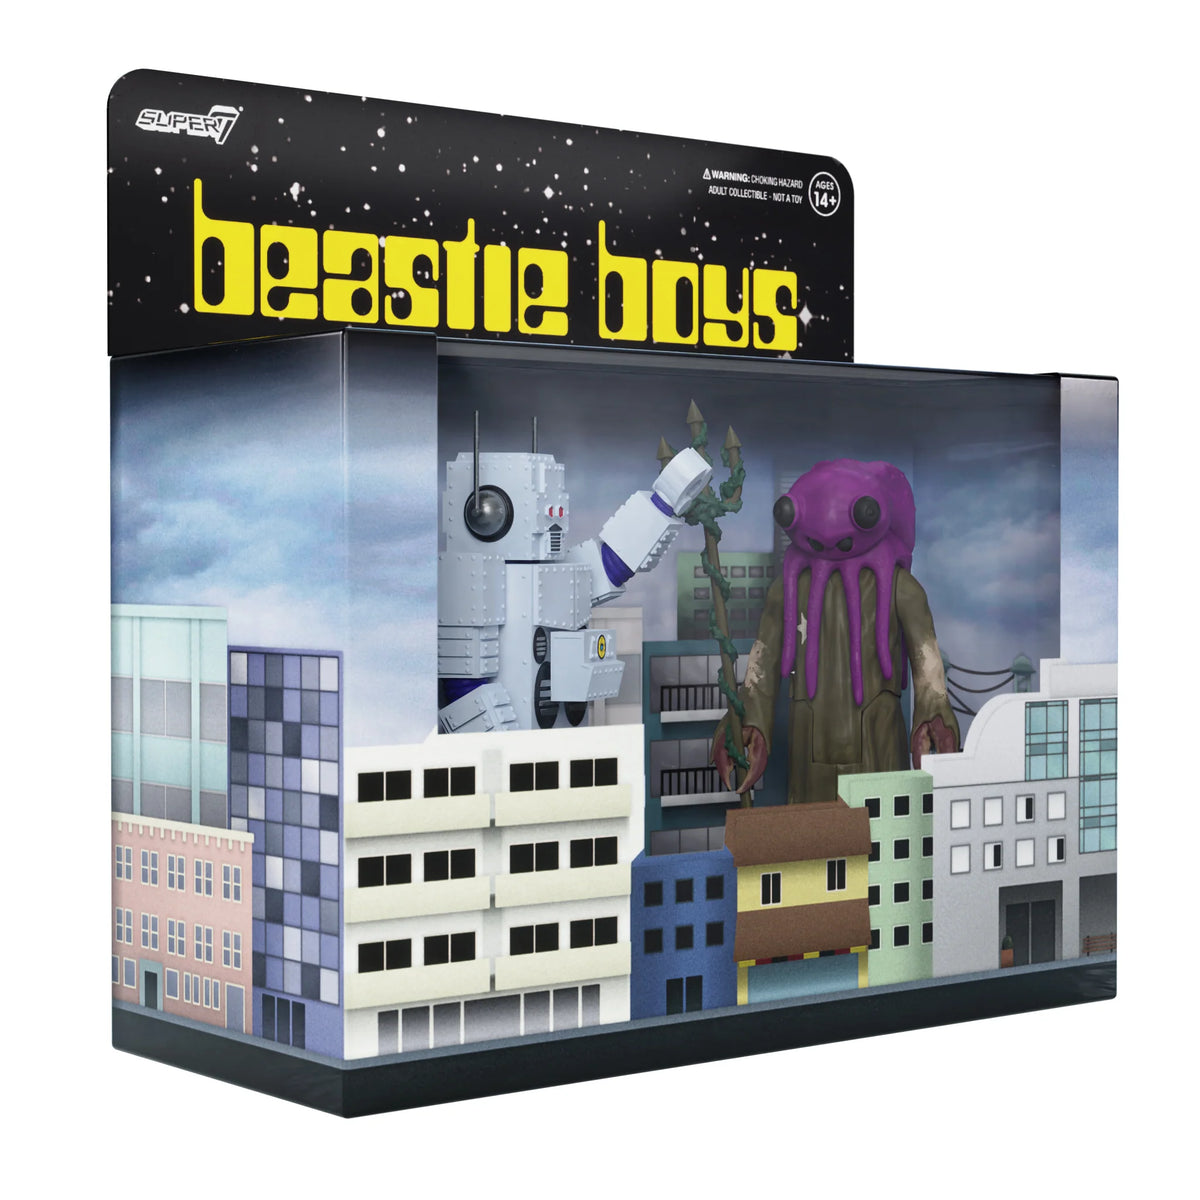 Beastie Boys ReAction Figures-Intergalactic 2 Pack